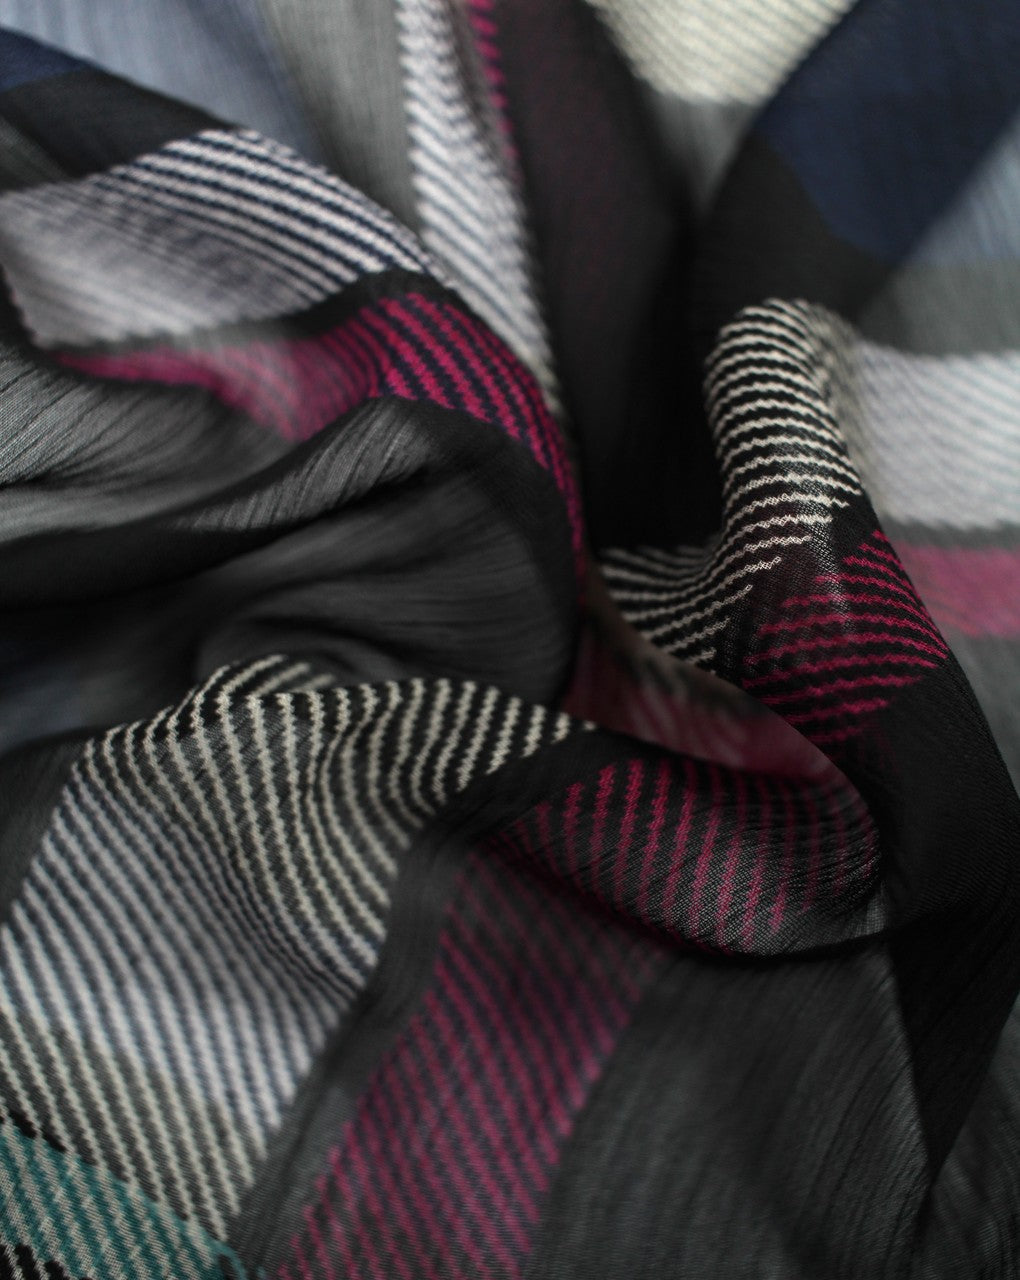 Black And Pink White Checks Print Polyester Chiffon Fabric